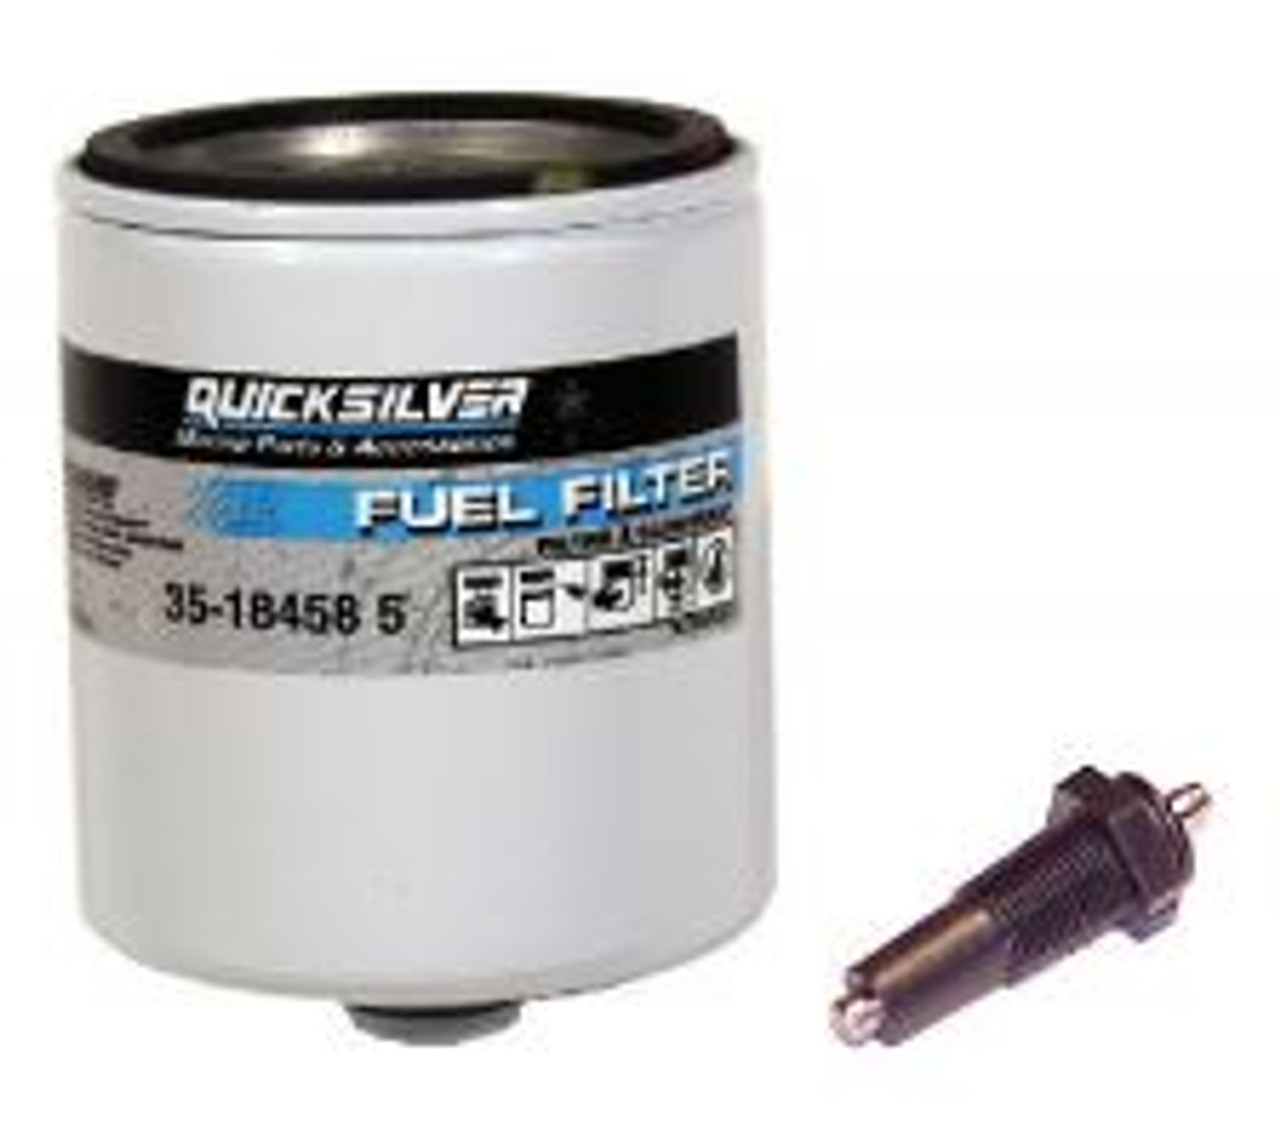 Quicksilver New OEM Water Separating Fuel Filter, 35-18458Q3